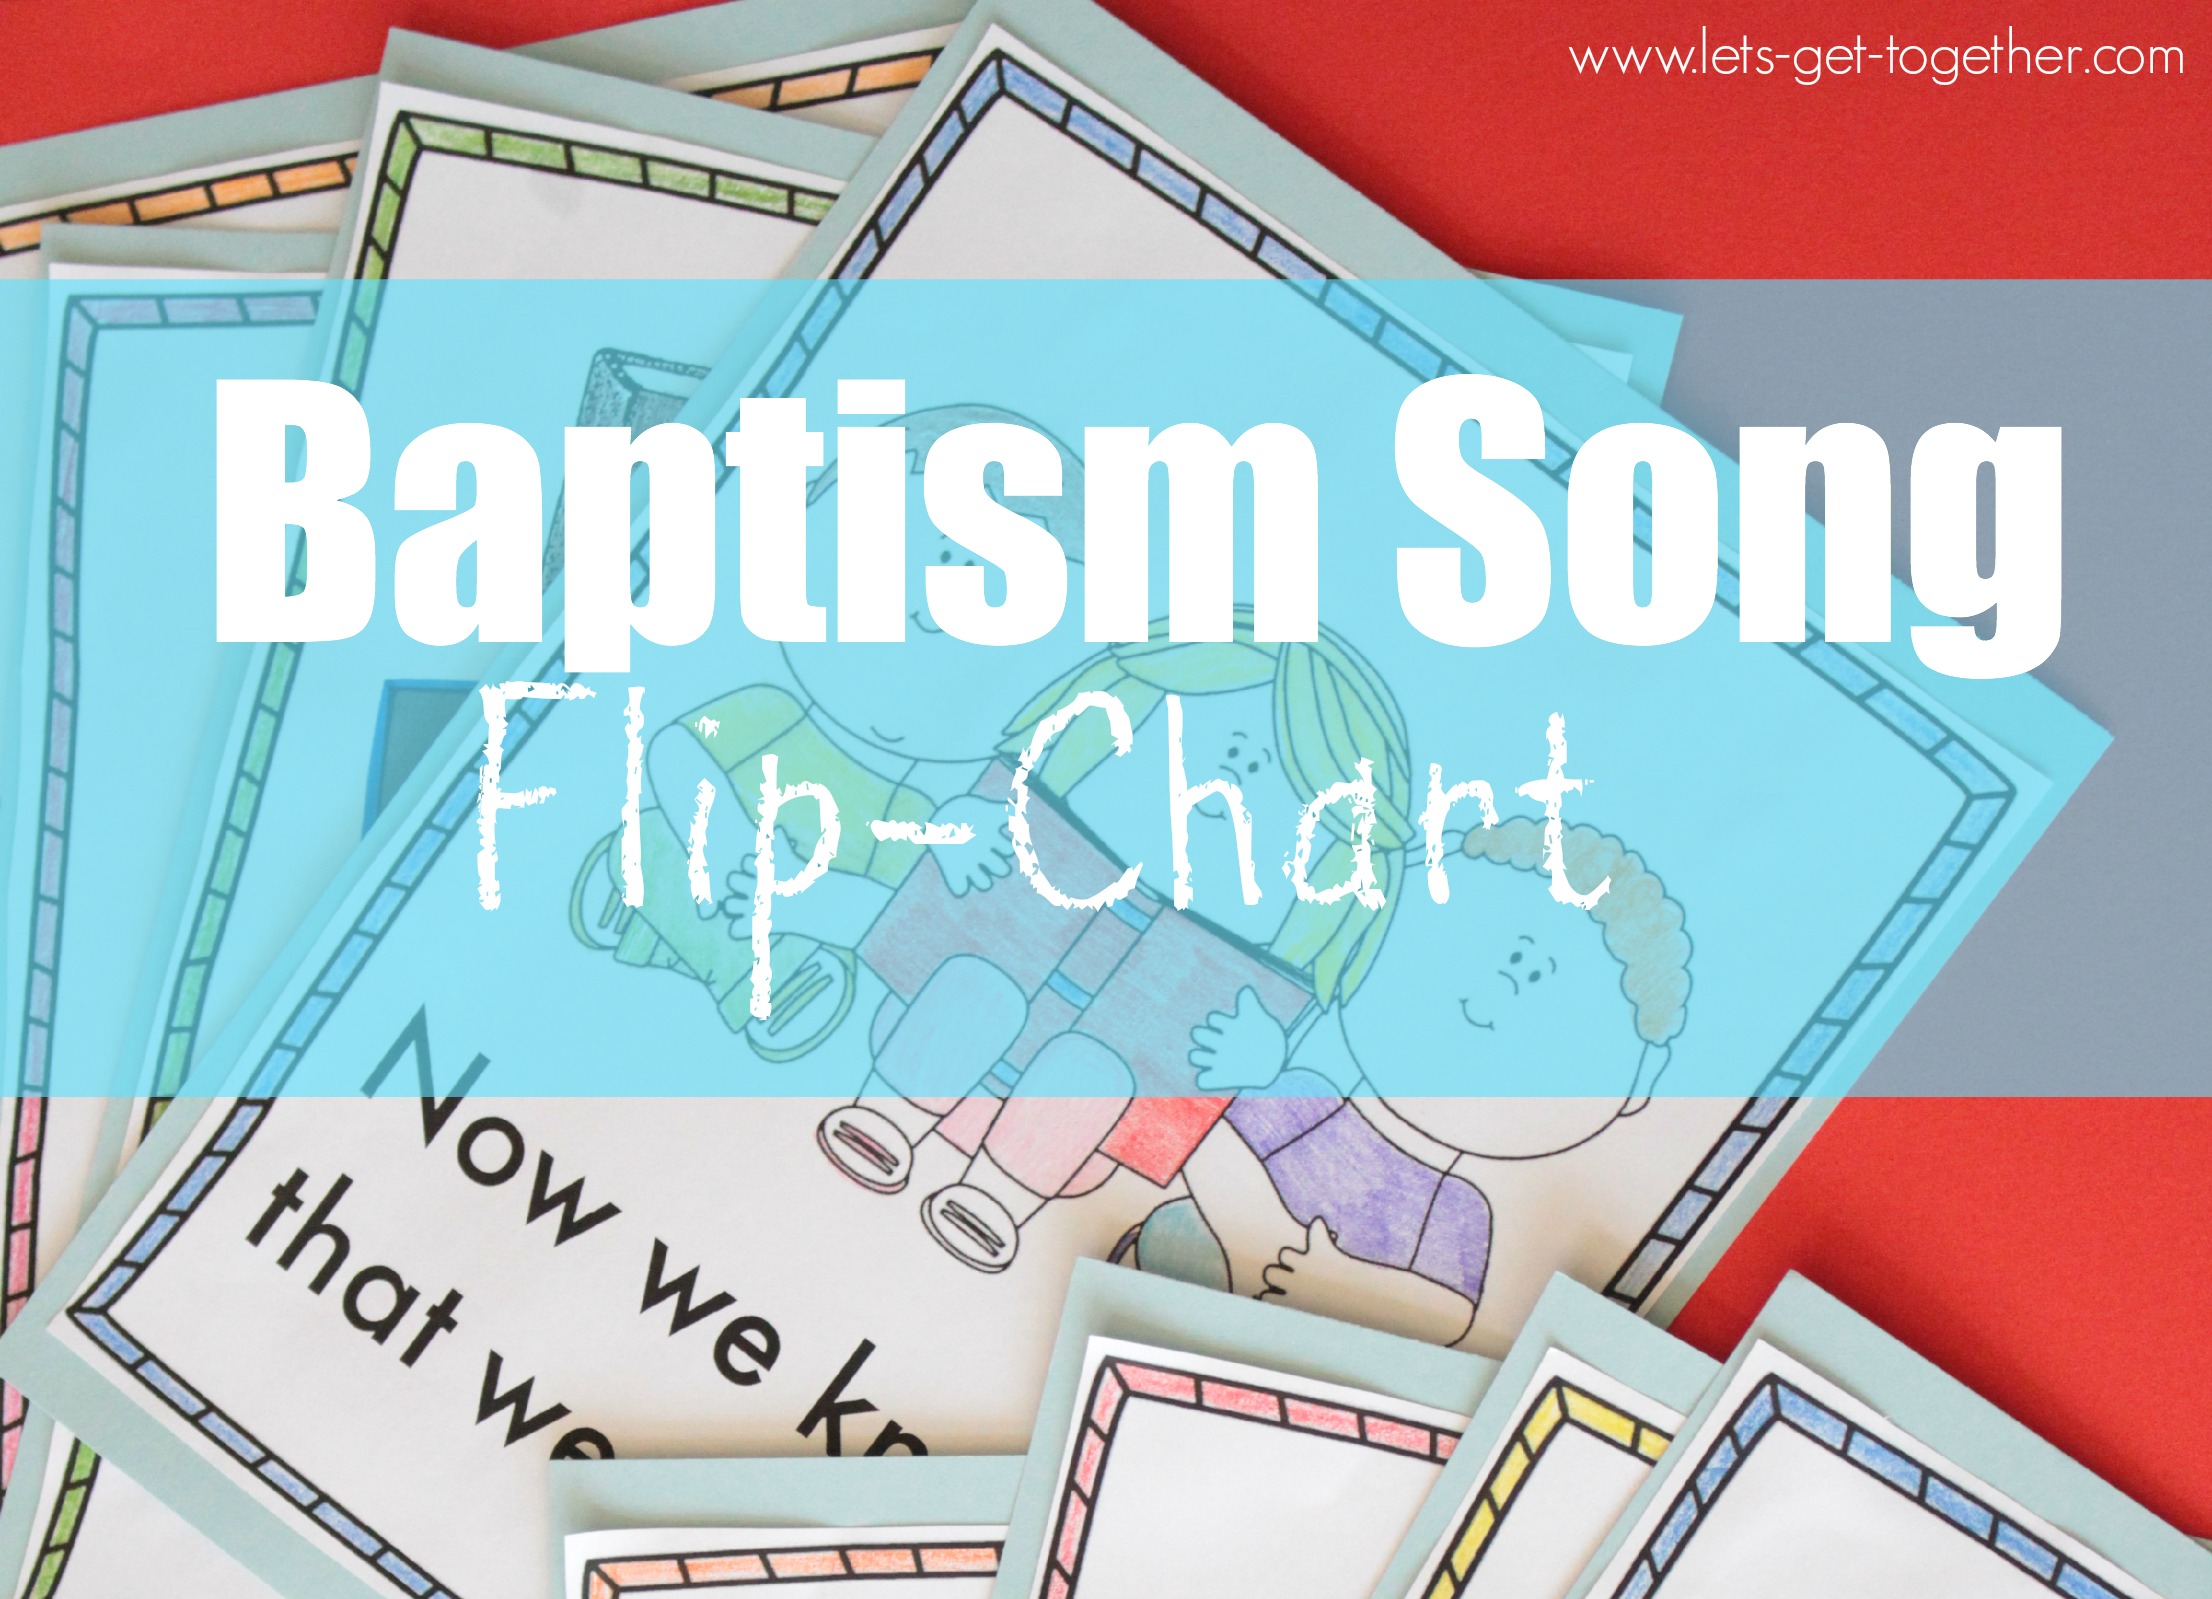 The Church Of Jesus Christ Flip Chart